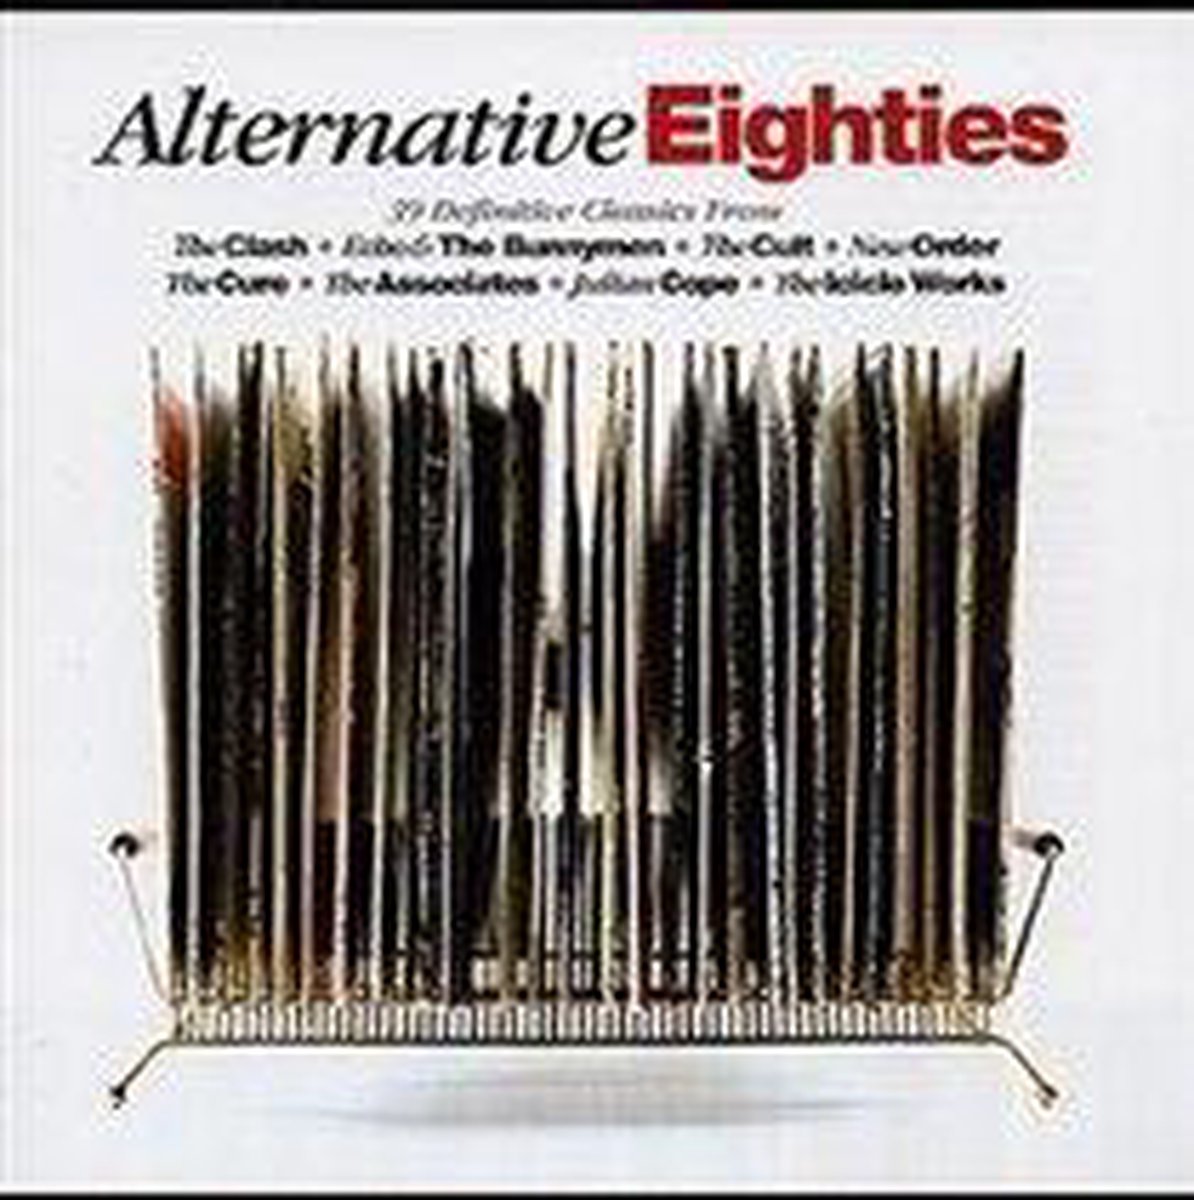 Alternative Eighties - various artists